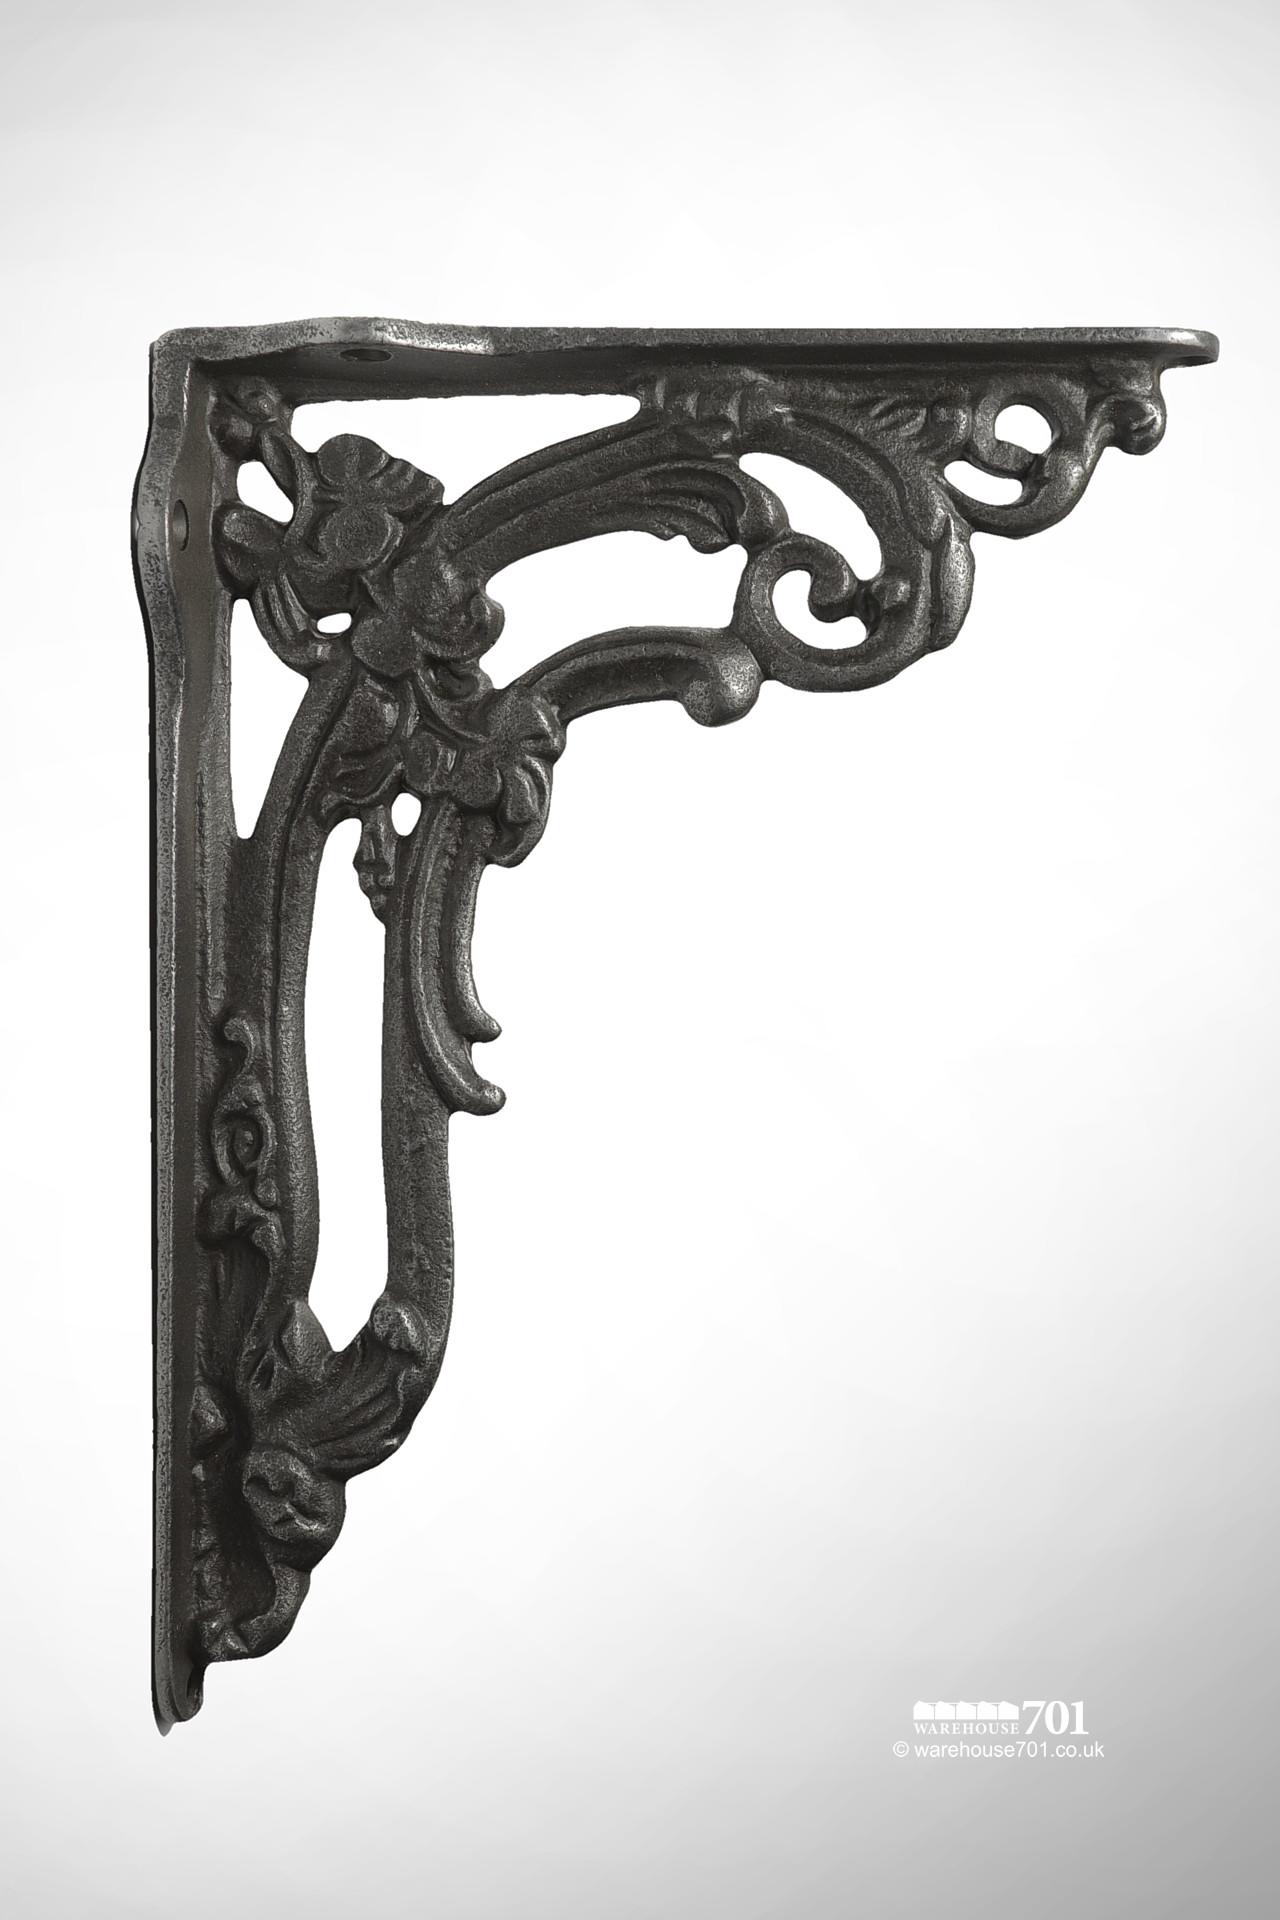 New Cast Iron Shelf Bracket with a Victorian Flower Design #2